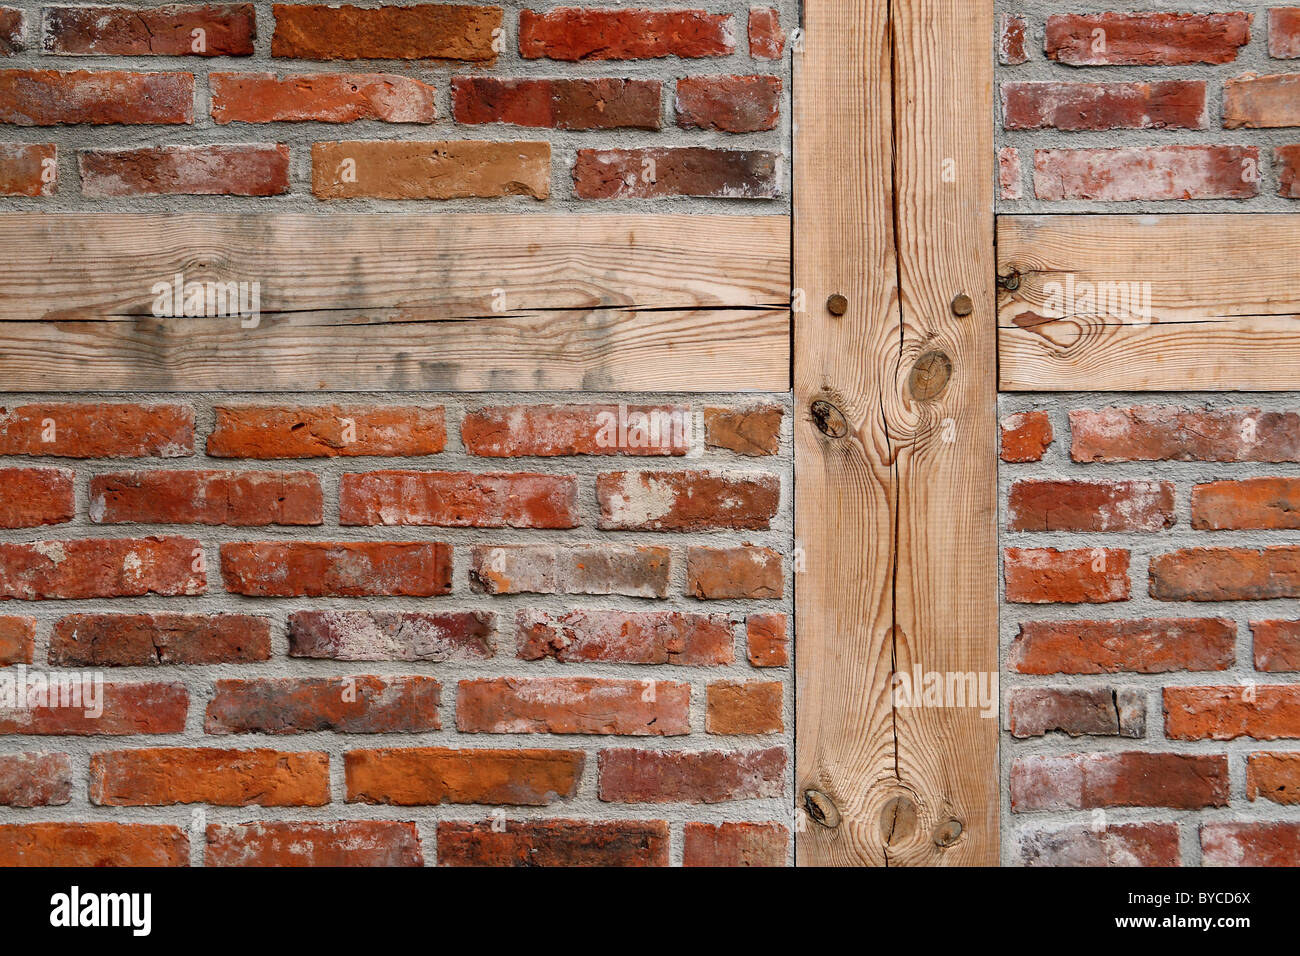 Timber framing - half-timbered construction of the wall. Stock Photo